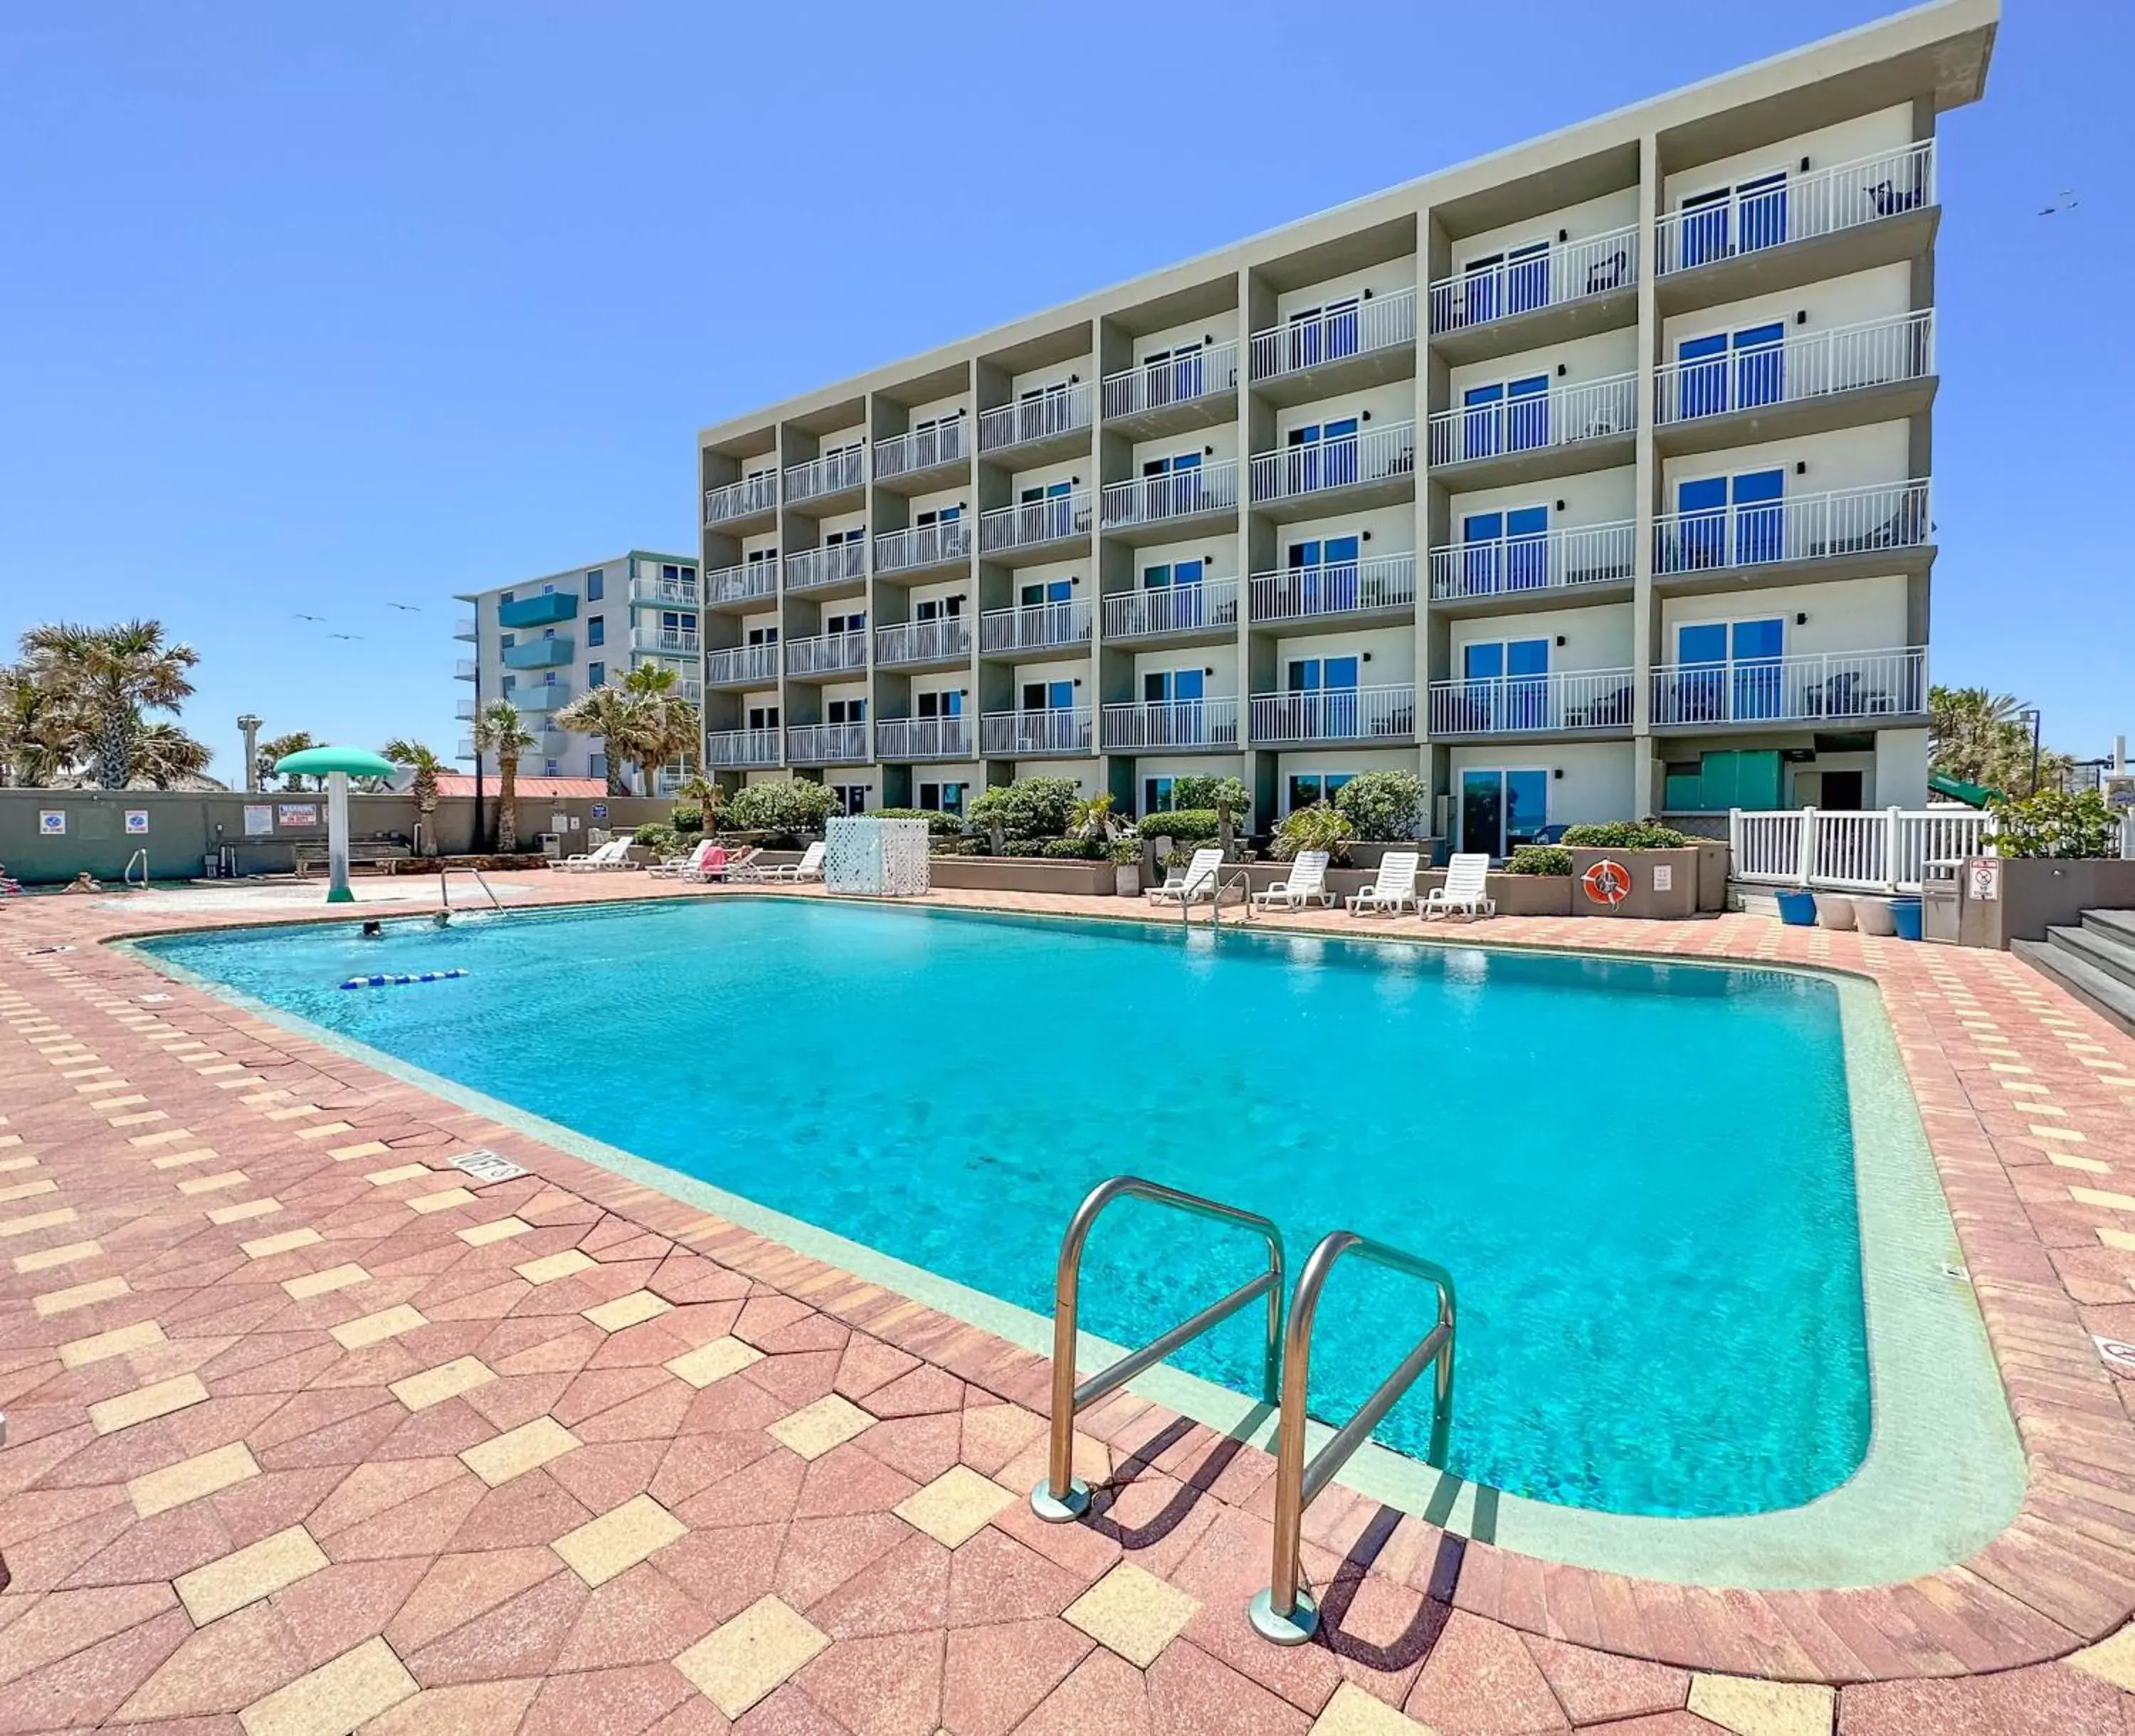 Swimming Pool in Boardwalk Inn and Suites